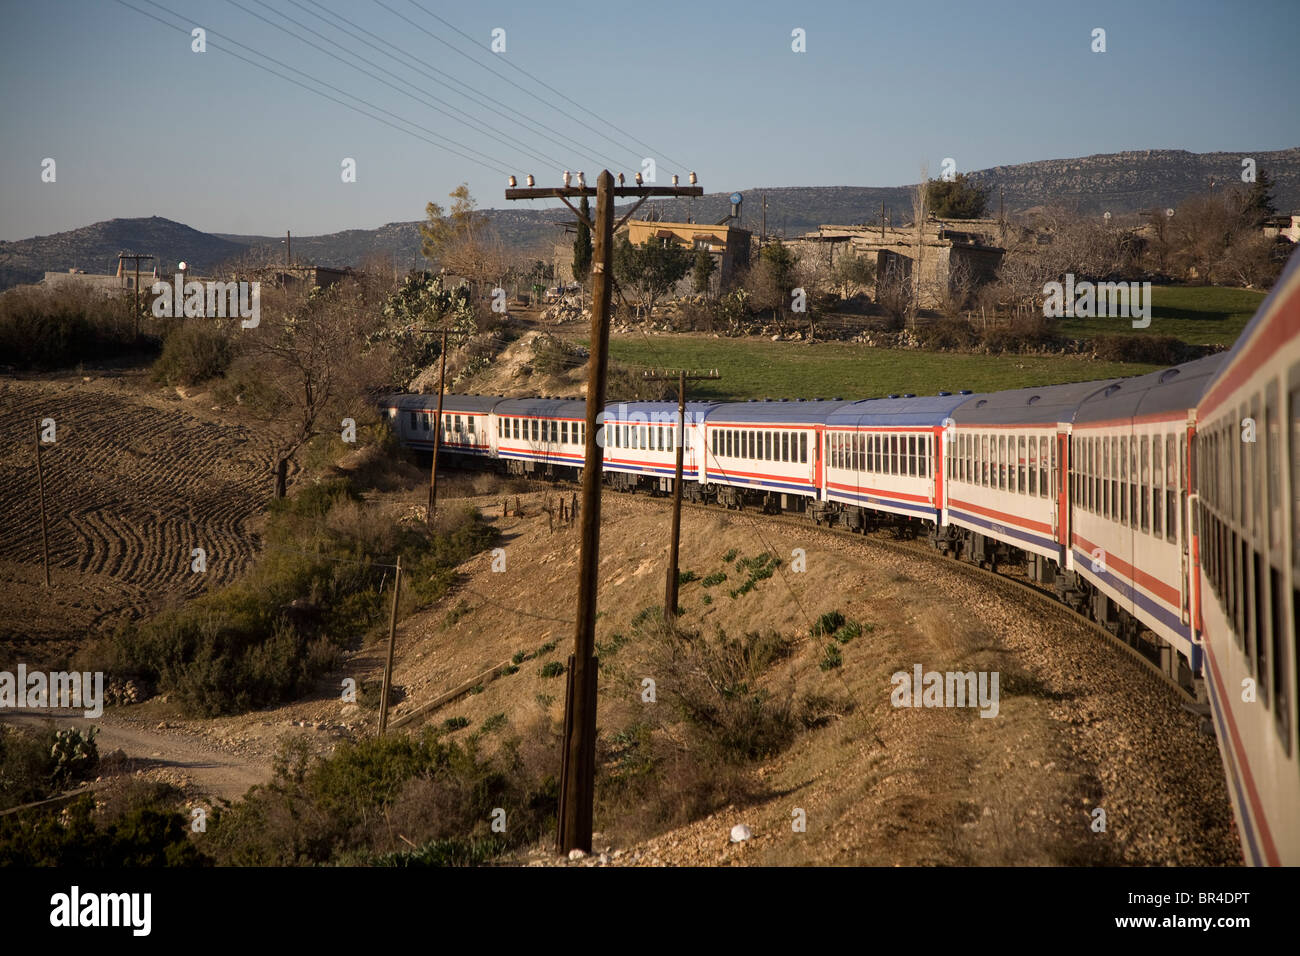 Train en route through mountain village in Central Turkey. Stock Photo